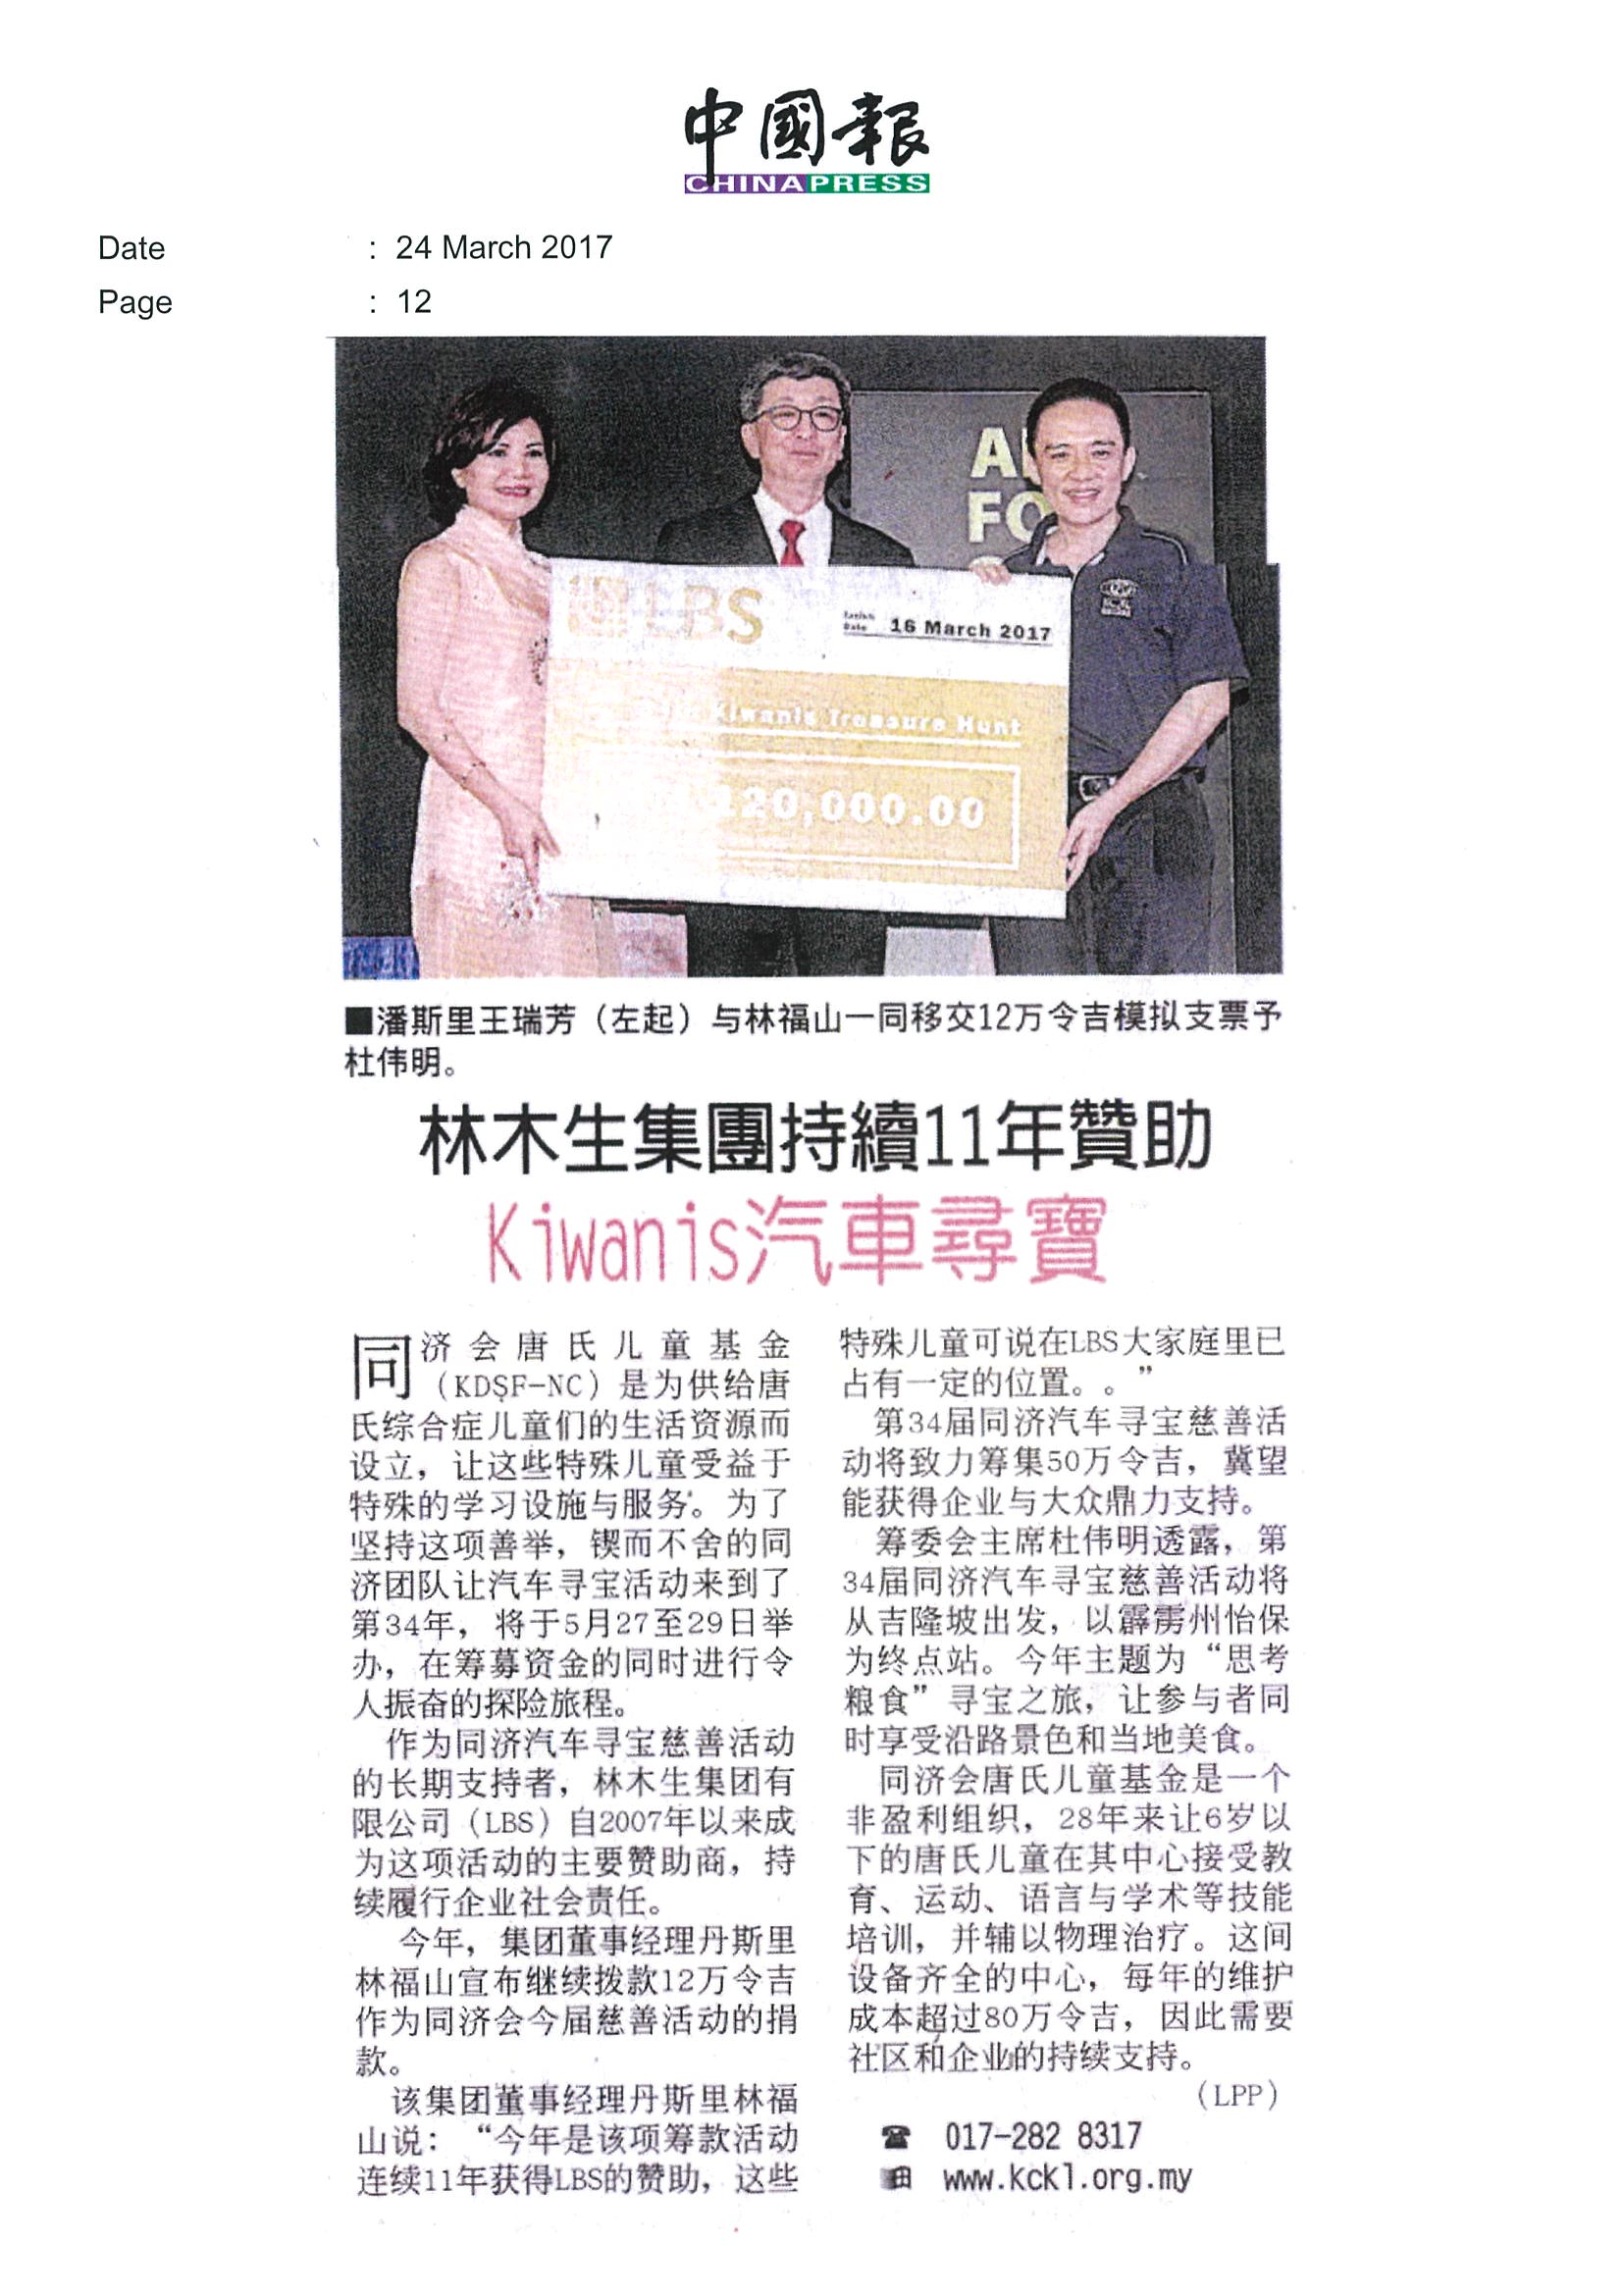 2017.03.24 China Press – LBS Bina continued its sponsorship for 11 years